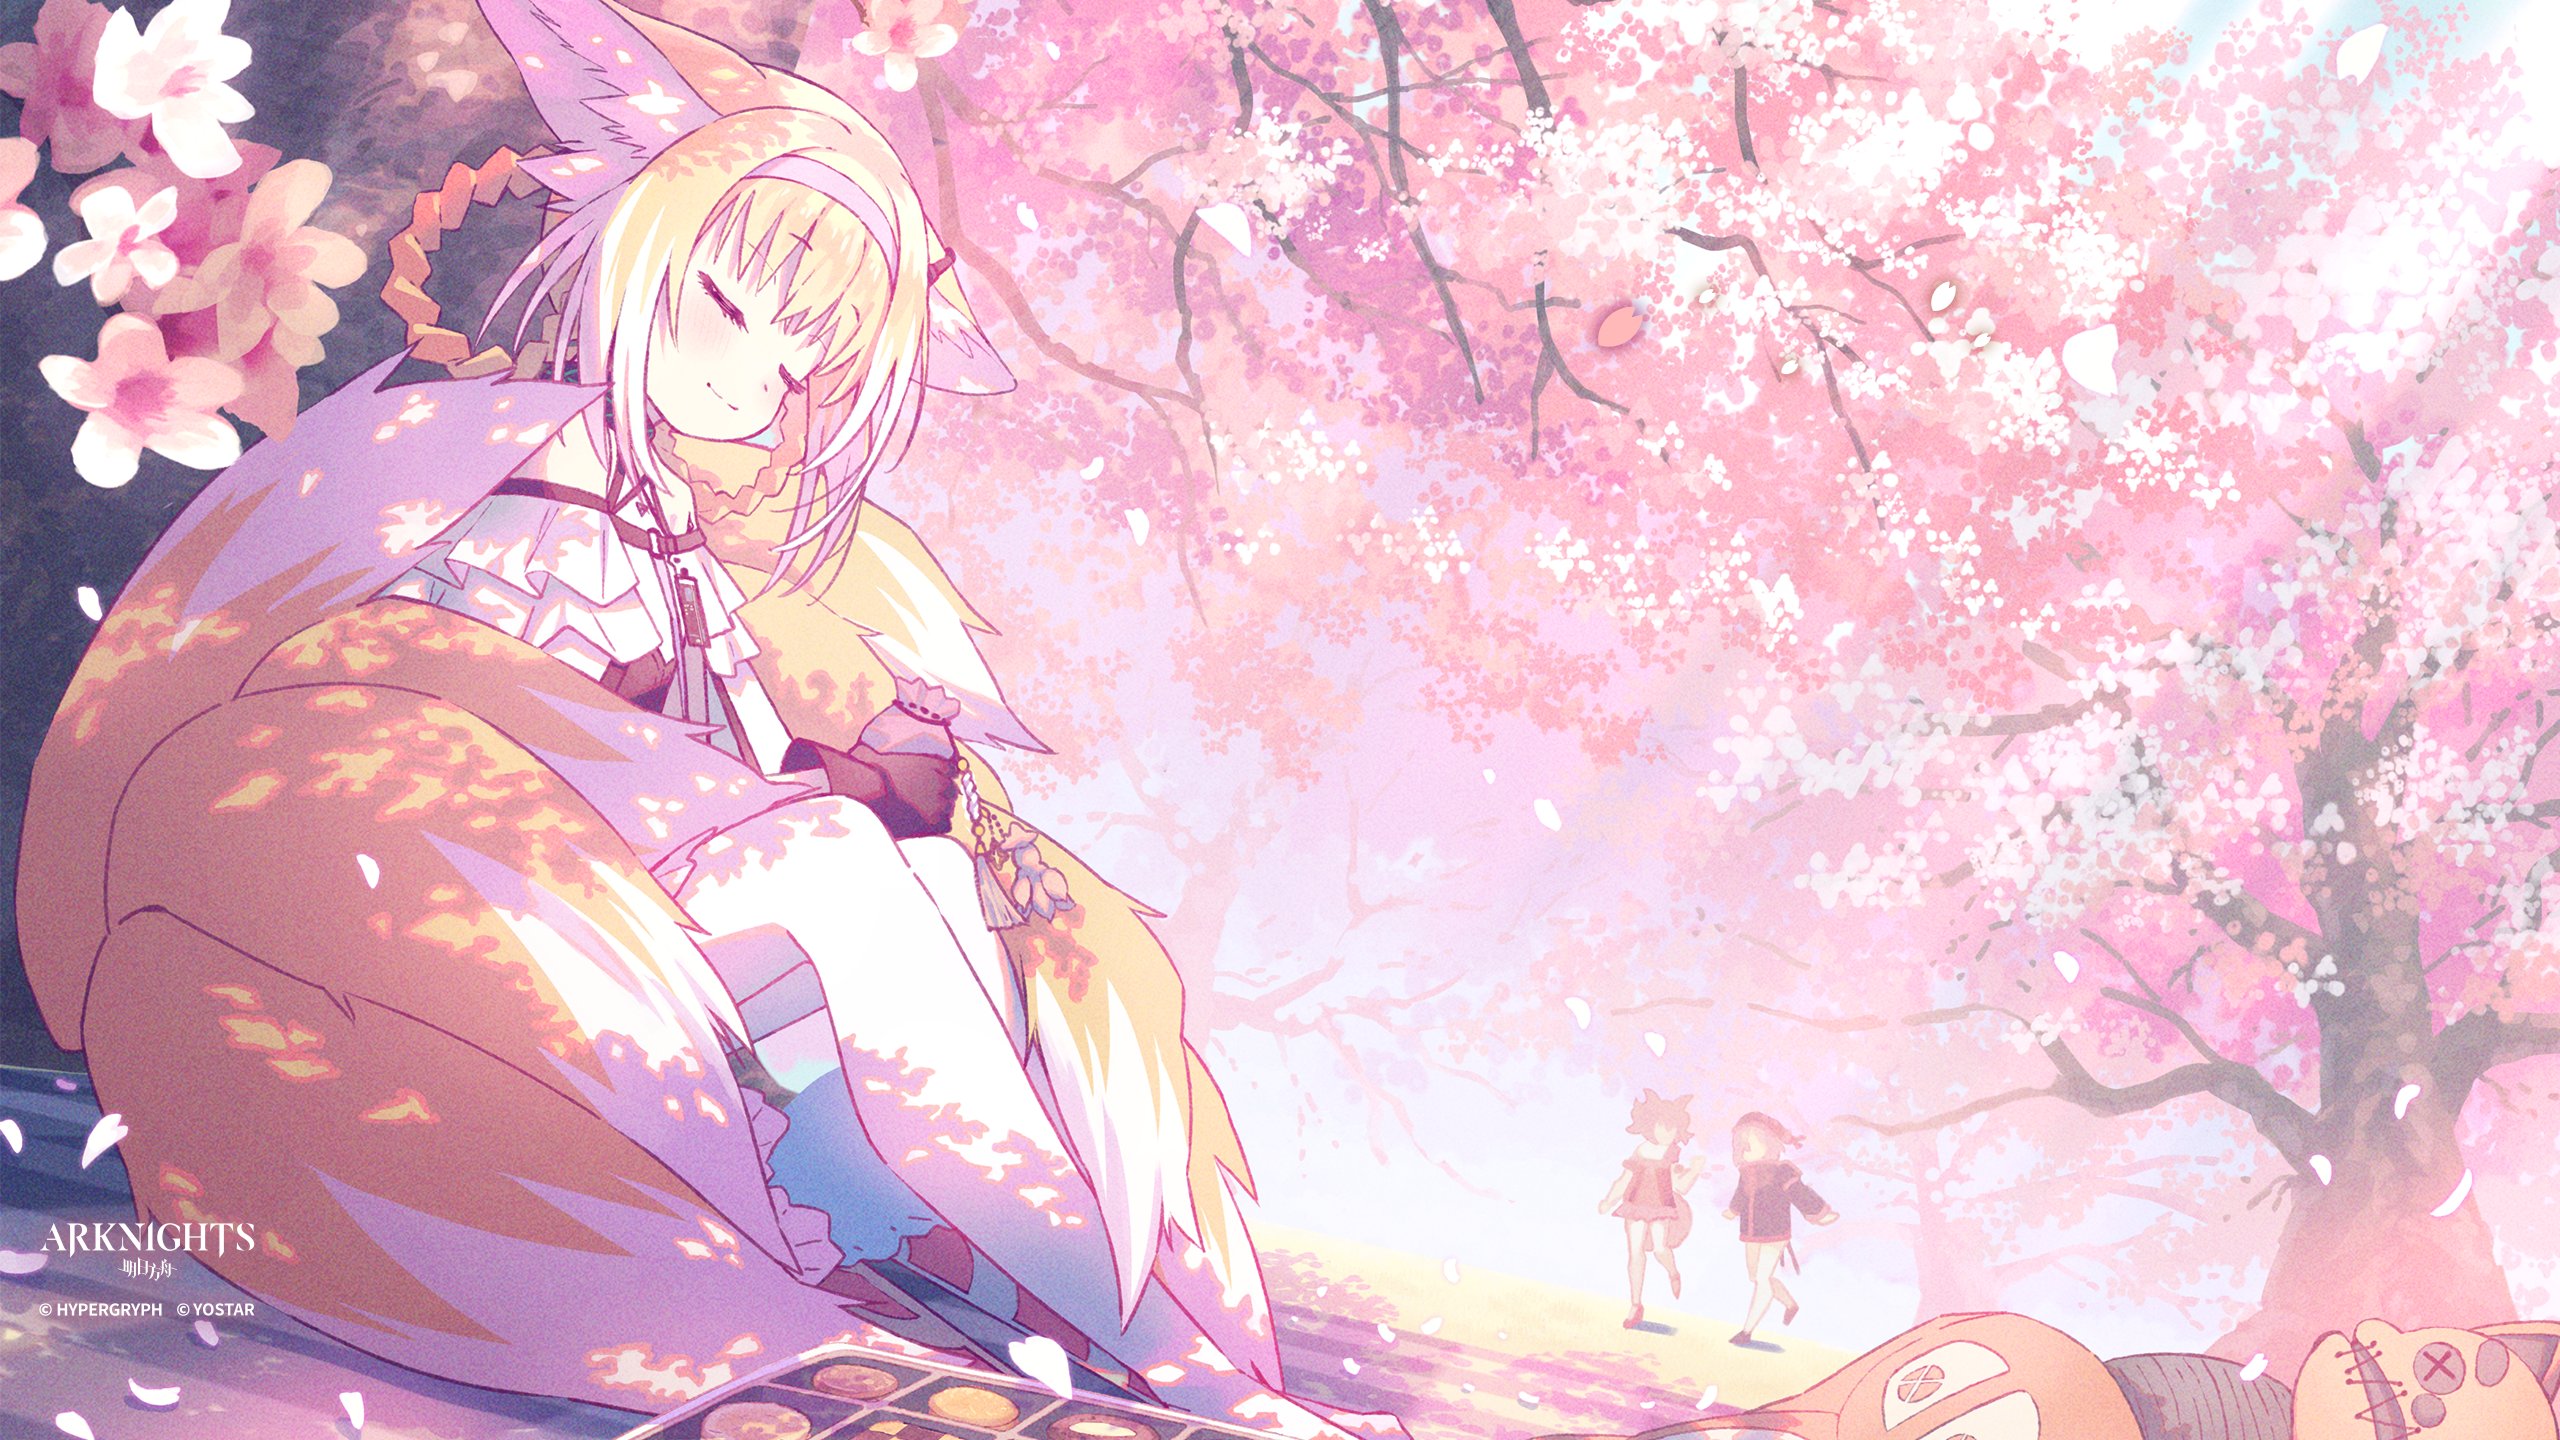 Anime 2560x1440 Arknights fox girl cherry blossom Suzuran (Arknights) Shamare(Arknights) Popukar (Arknights) trees flowers closed eyes petals anime girls fox ears fox tail smiling